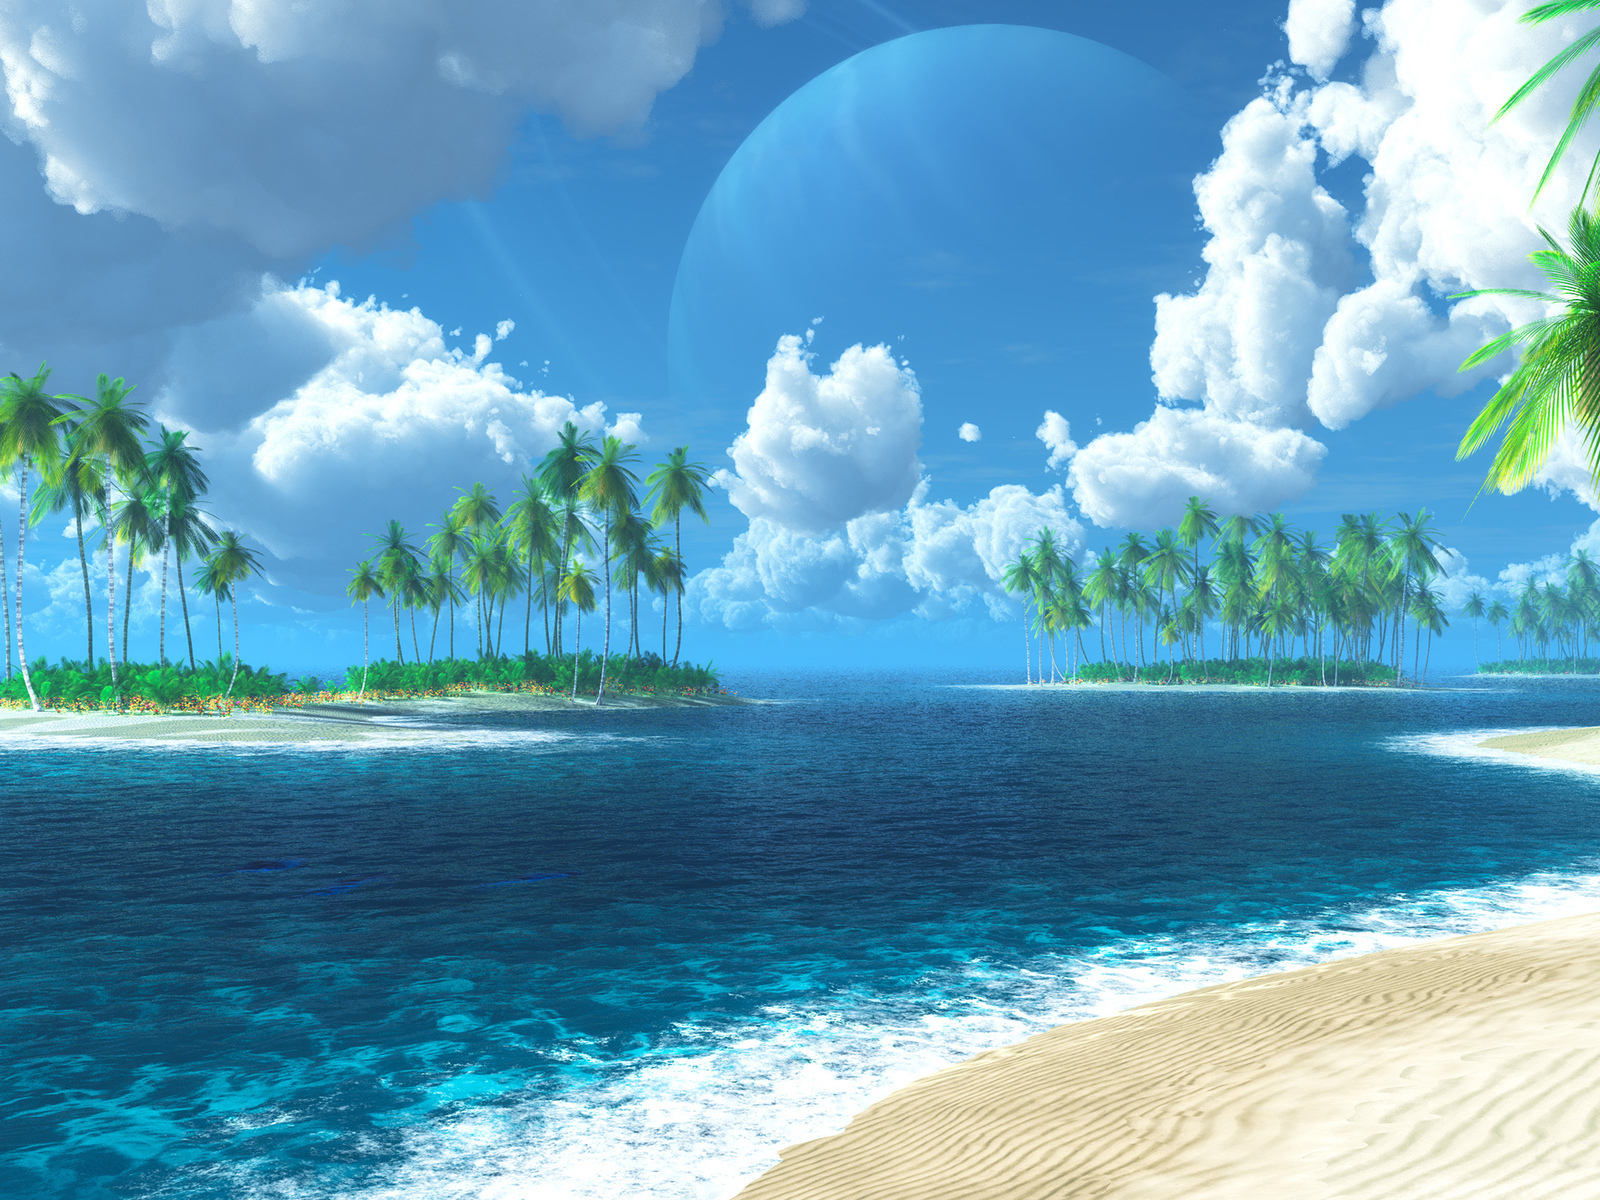 Descarga gratuita de fondo de pantalla para móvil de Mar, Playa, Paisaje, Nubes, Palms.